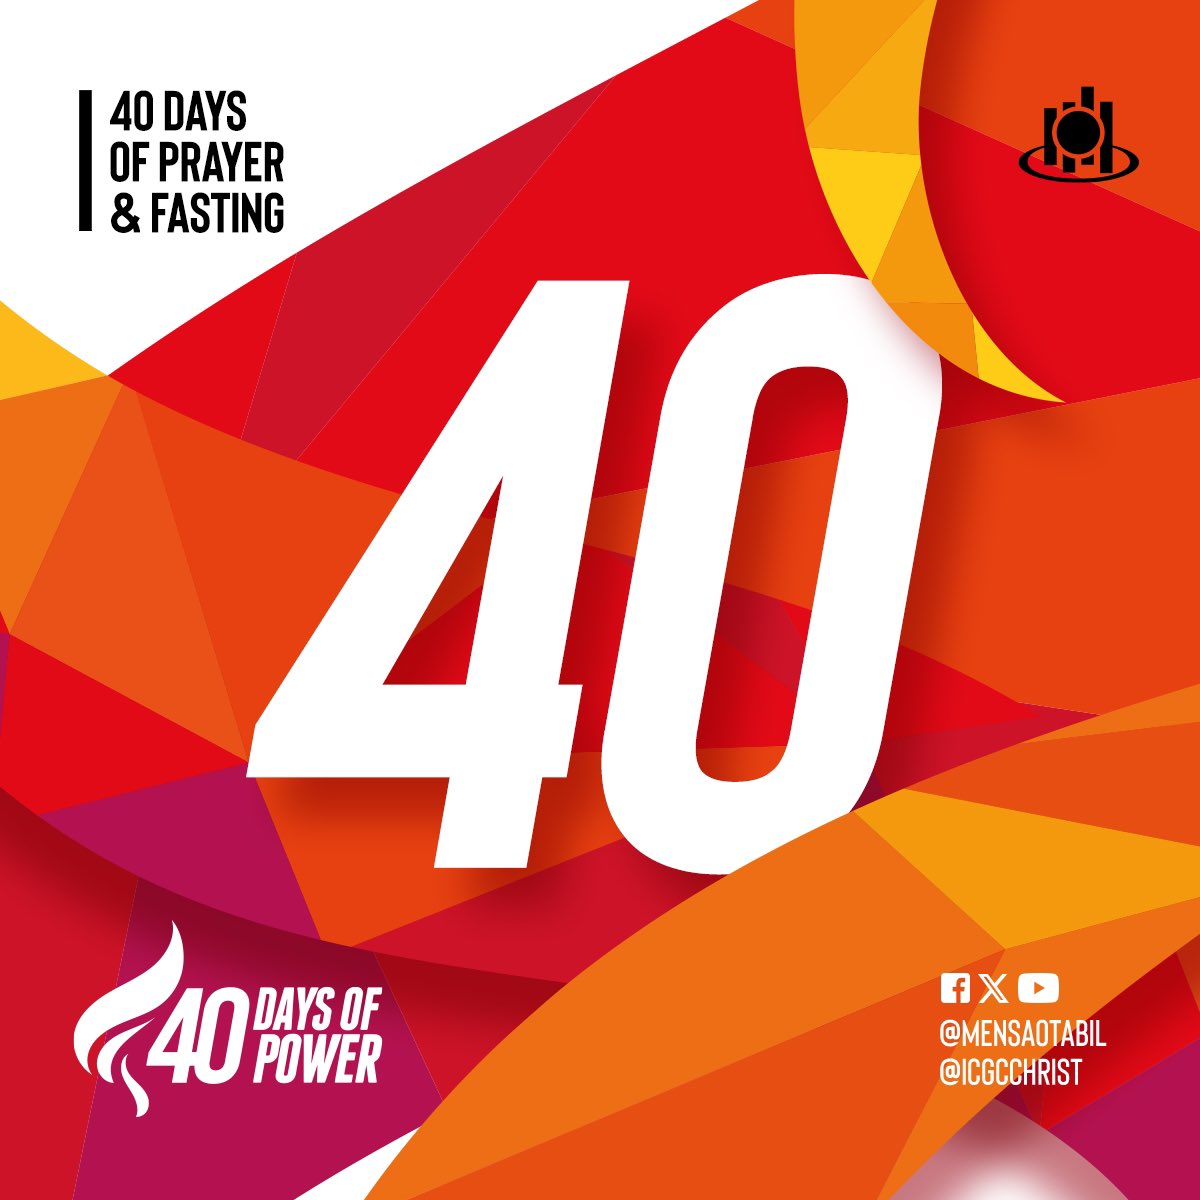 Only 40 days until we experience God’s presence and power!

#40DaysOfPower #icgc #icgcworldwide #WeAreICGC #fasting #prayer #fastingandprayer #OurGodYear2024